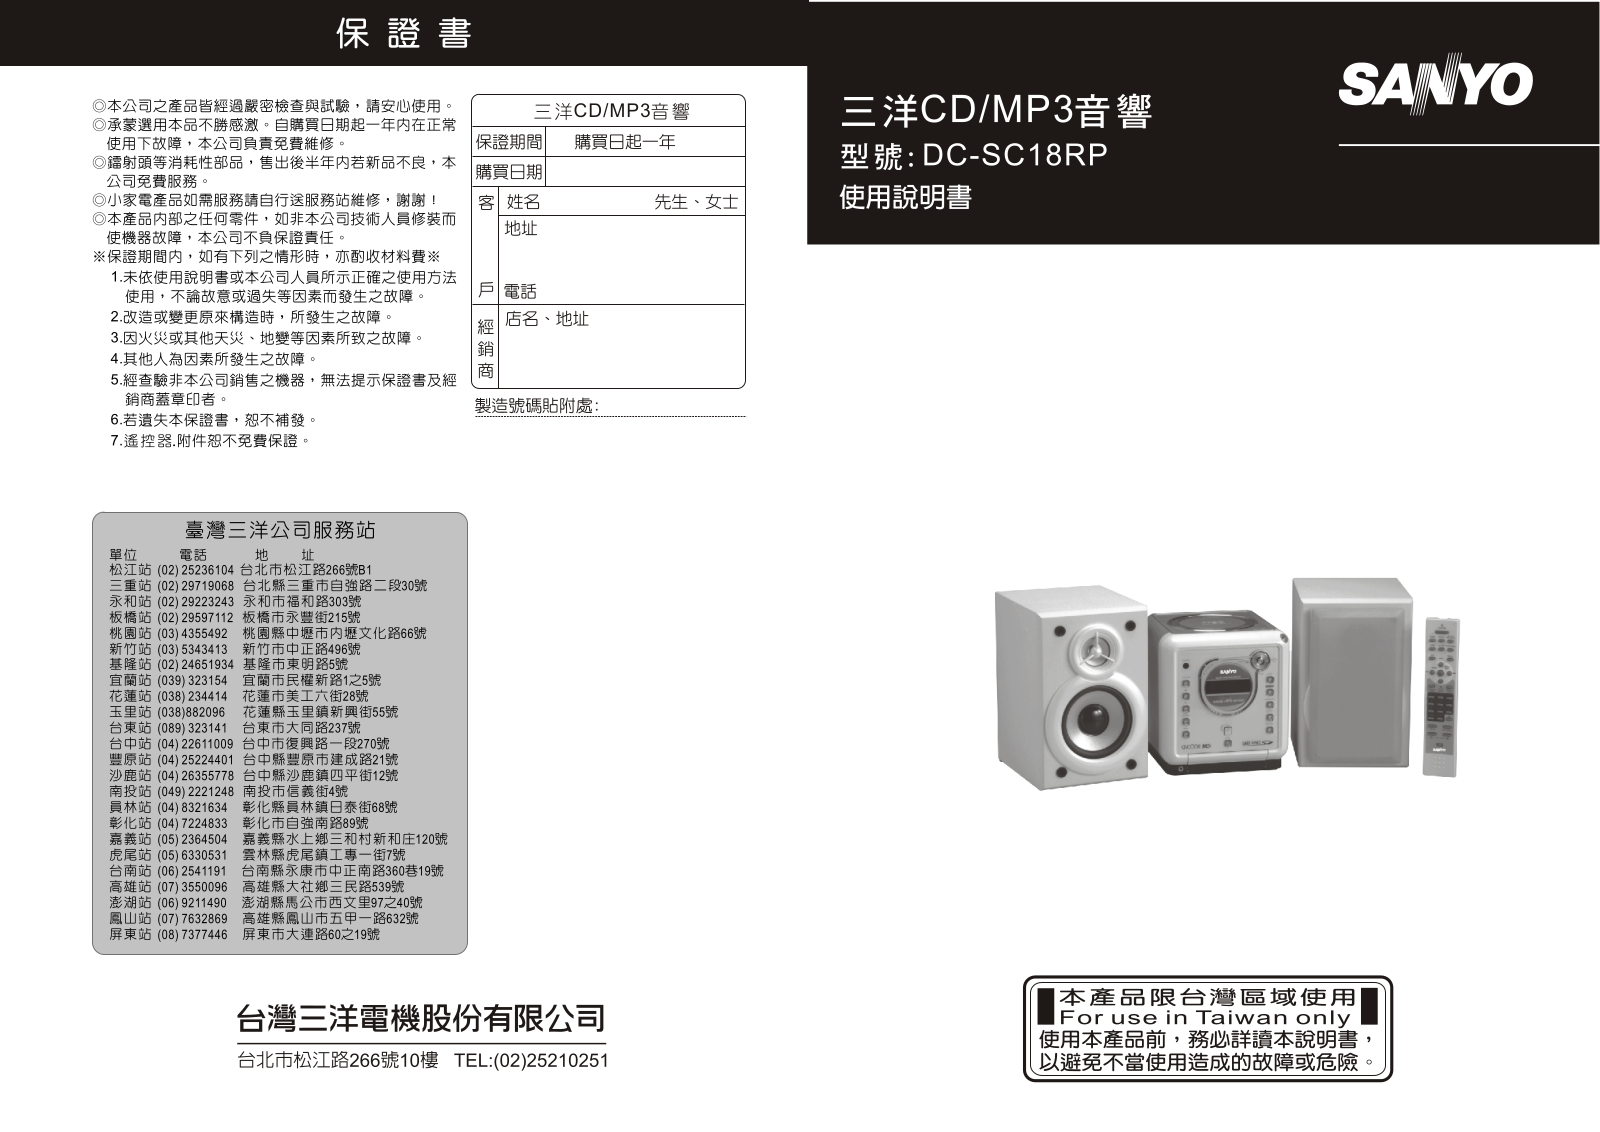 SANYO DC-SC18RP User Manual